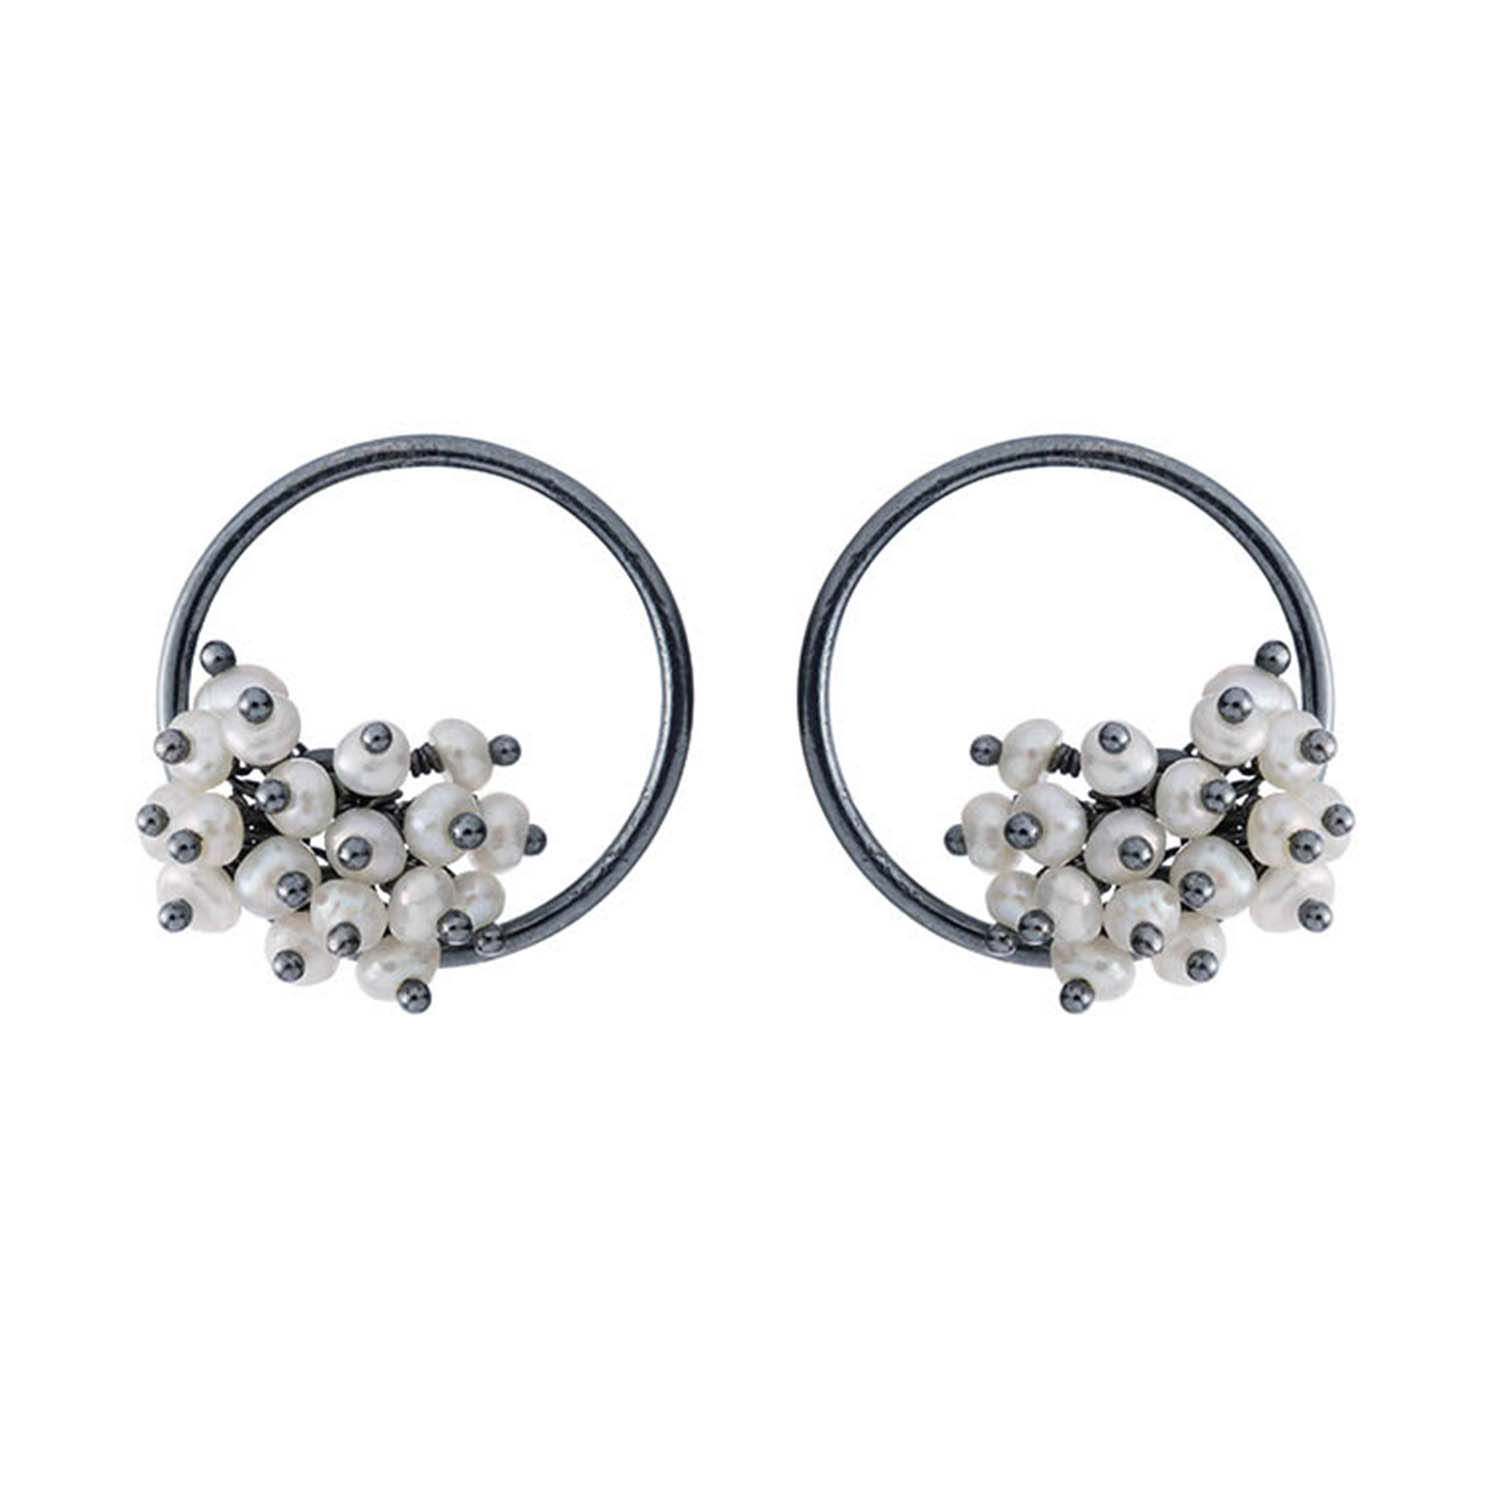 Adva small pearl hoop earrings